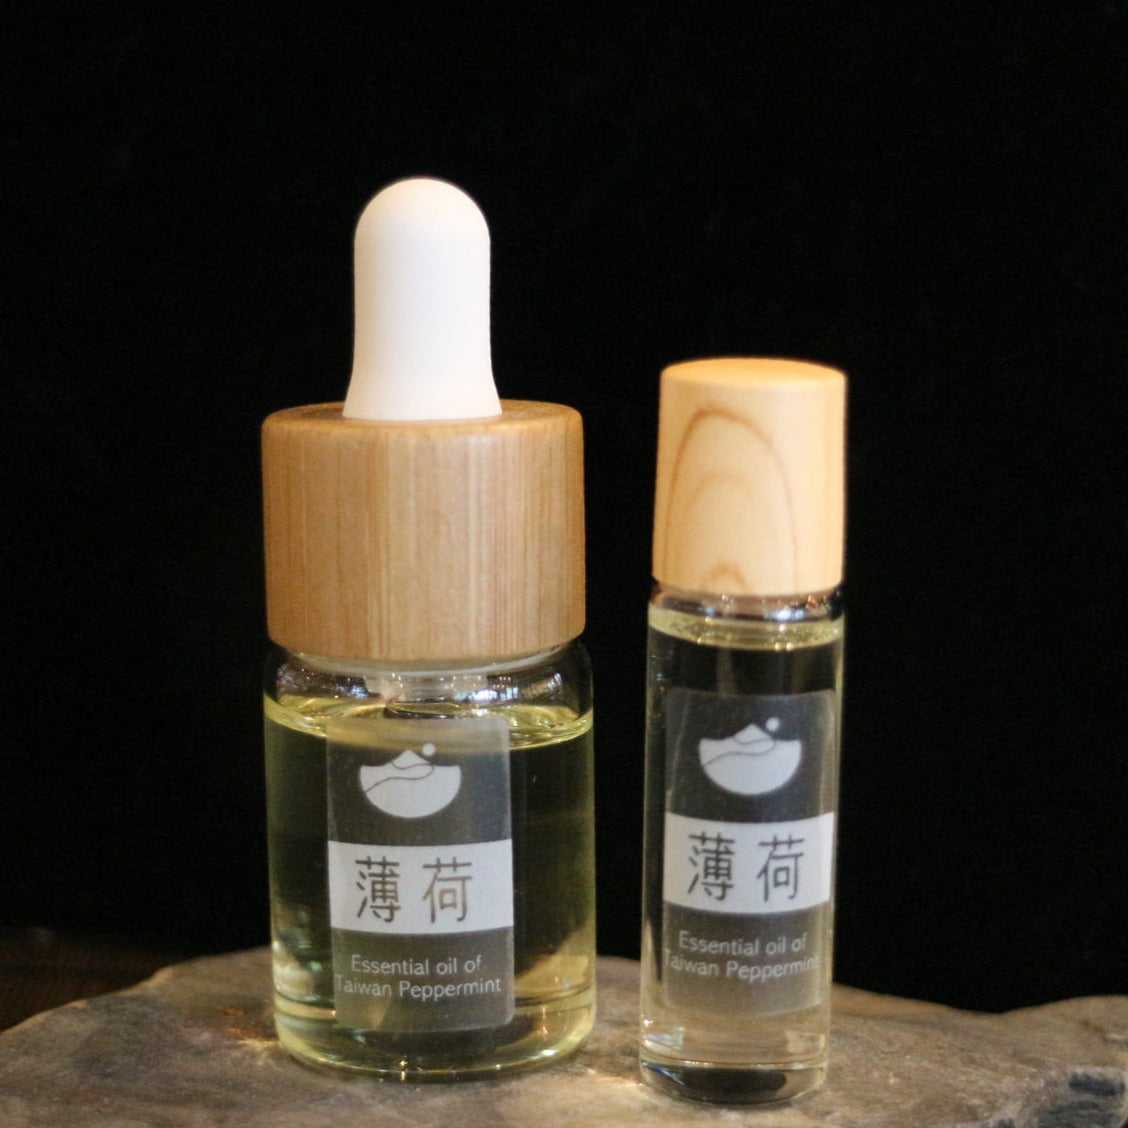 Taiwan Peppermint Essential Oil